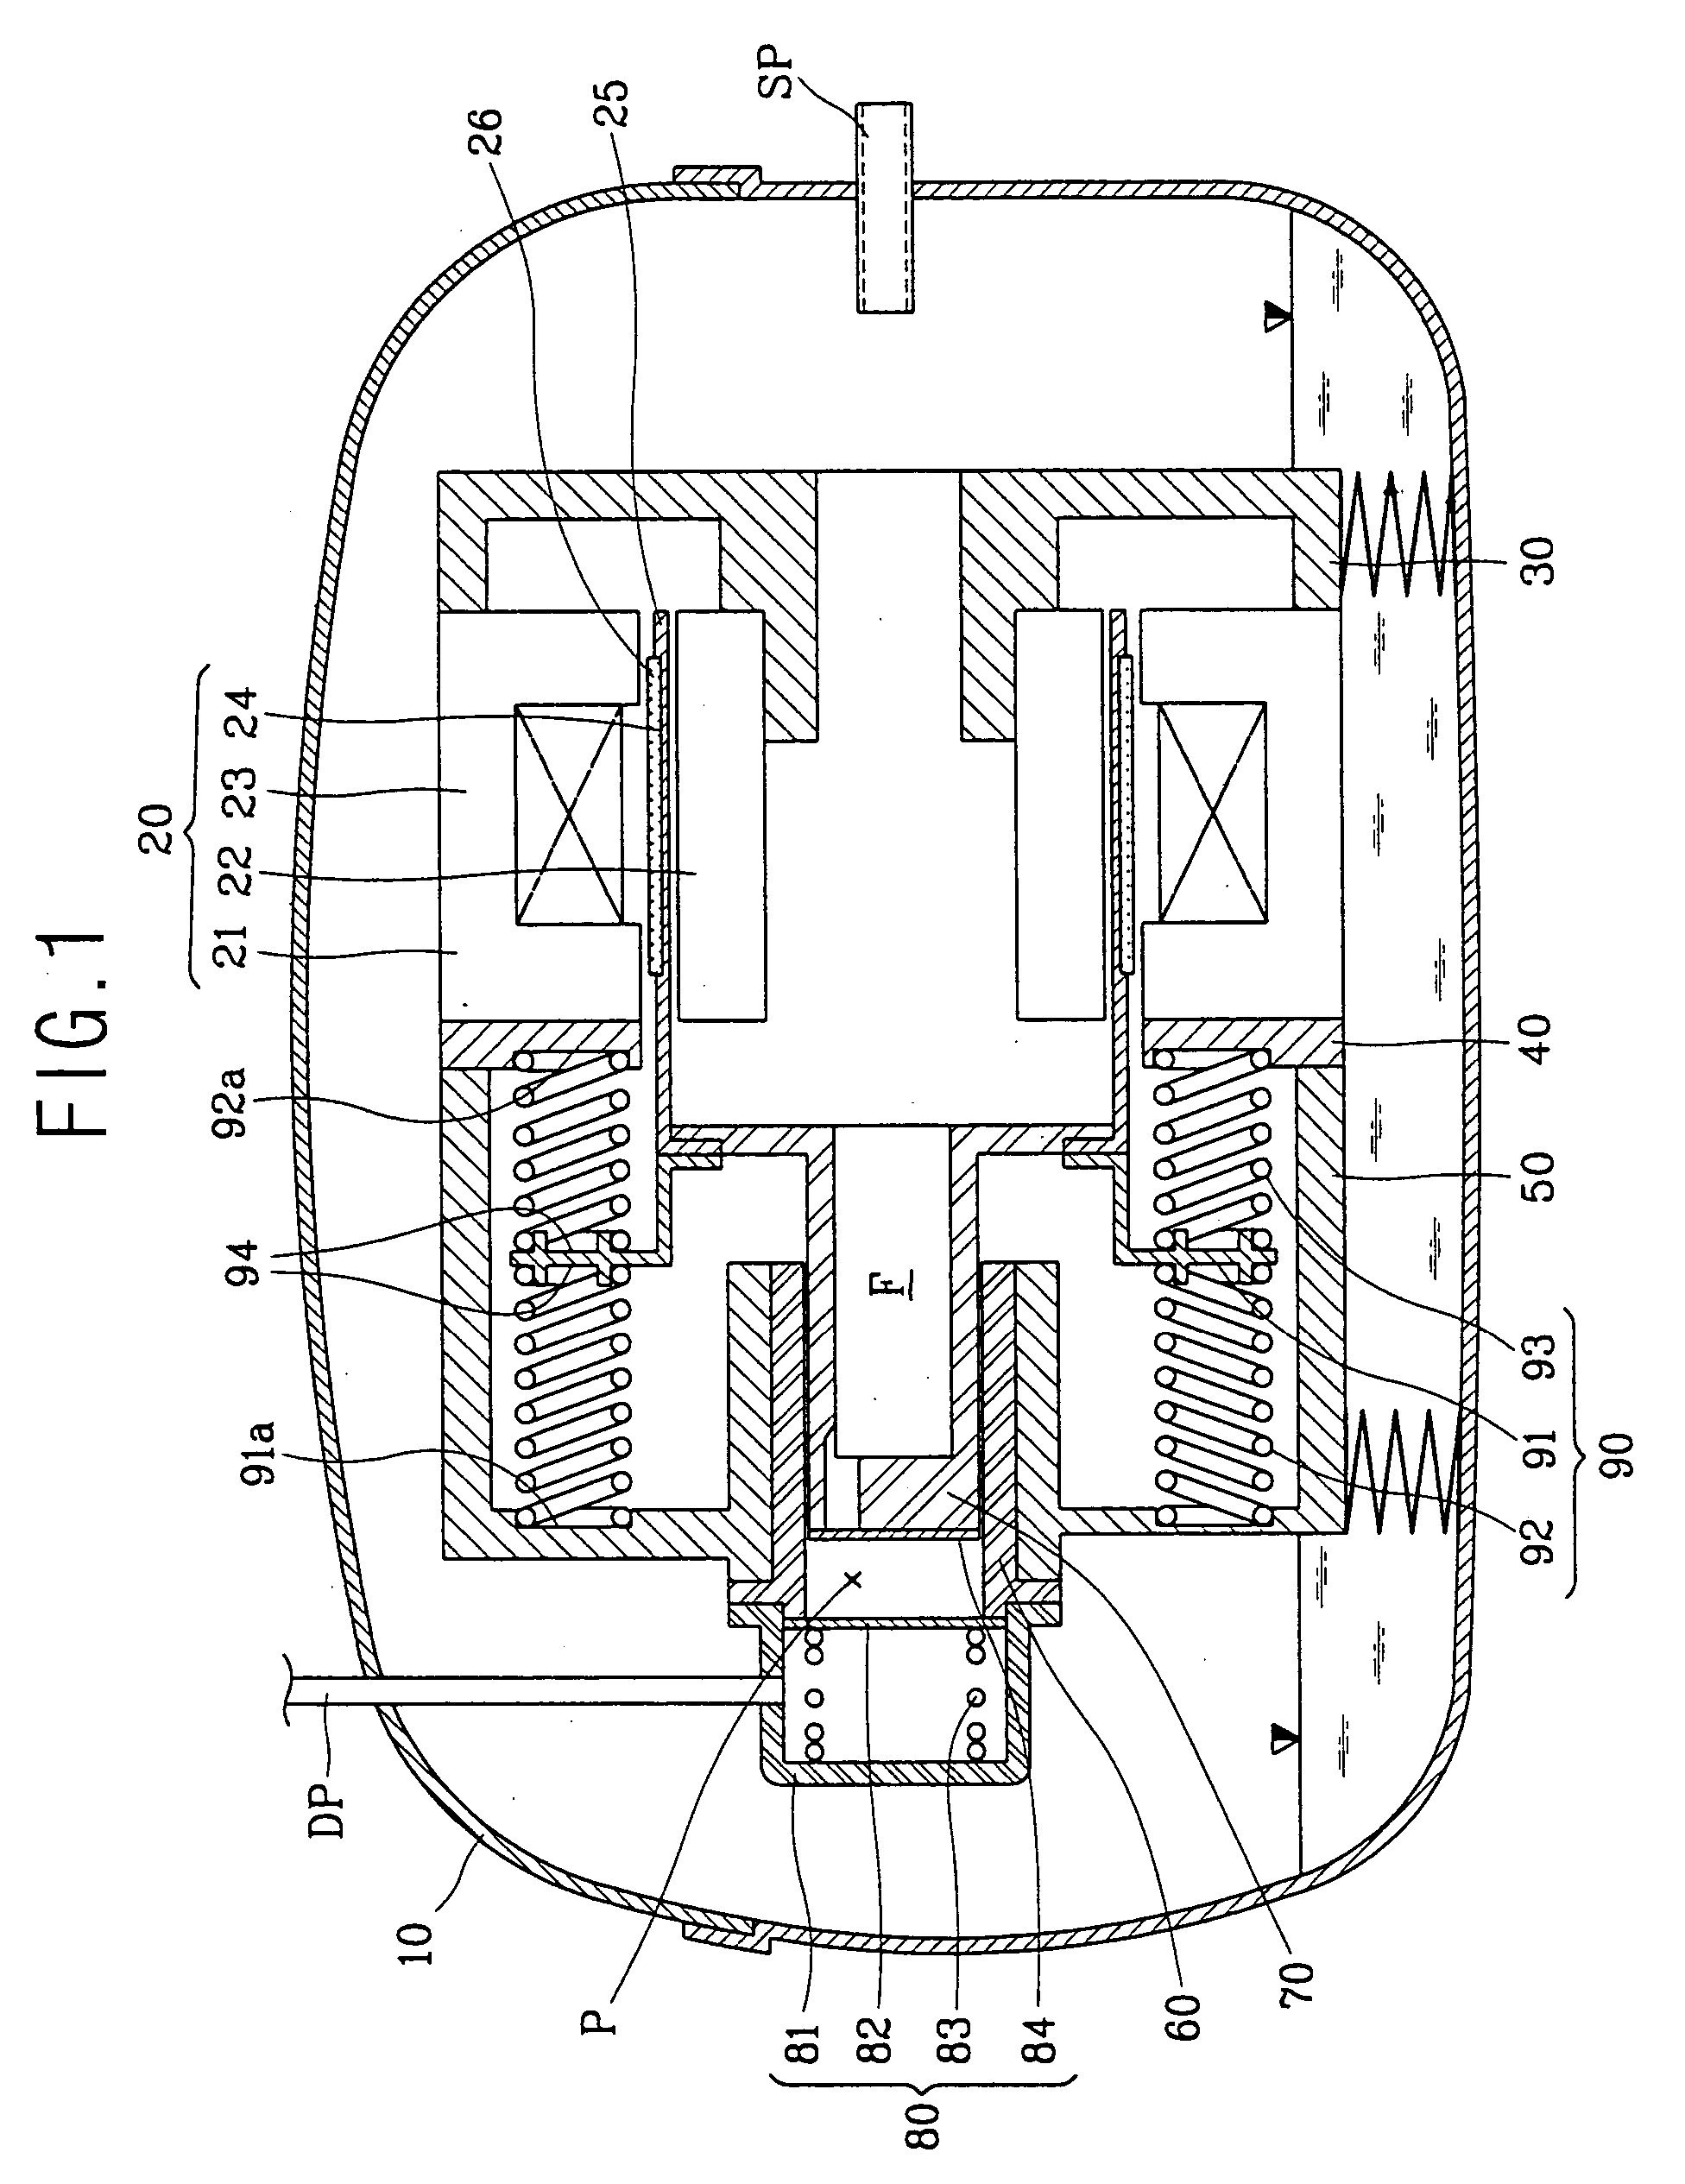 Abrasion preventive structure of reciprocating compressor